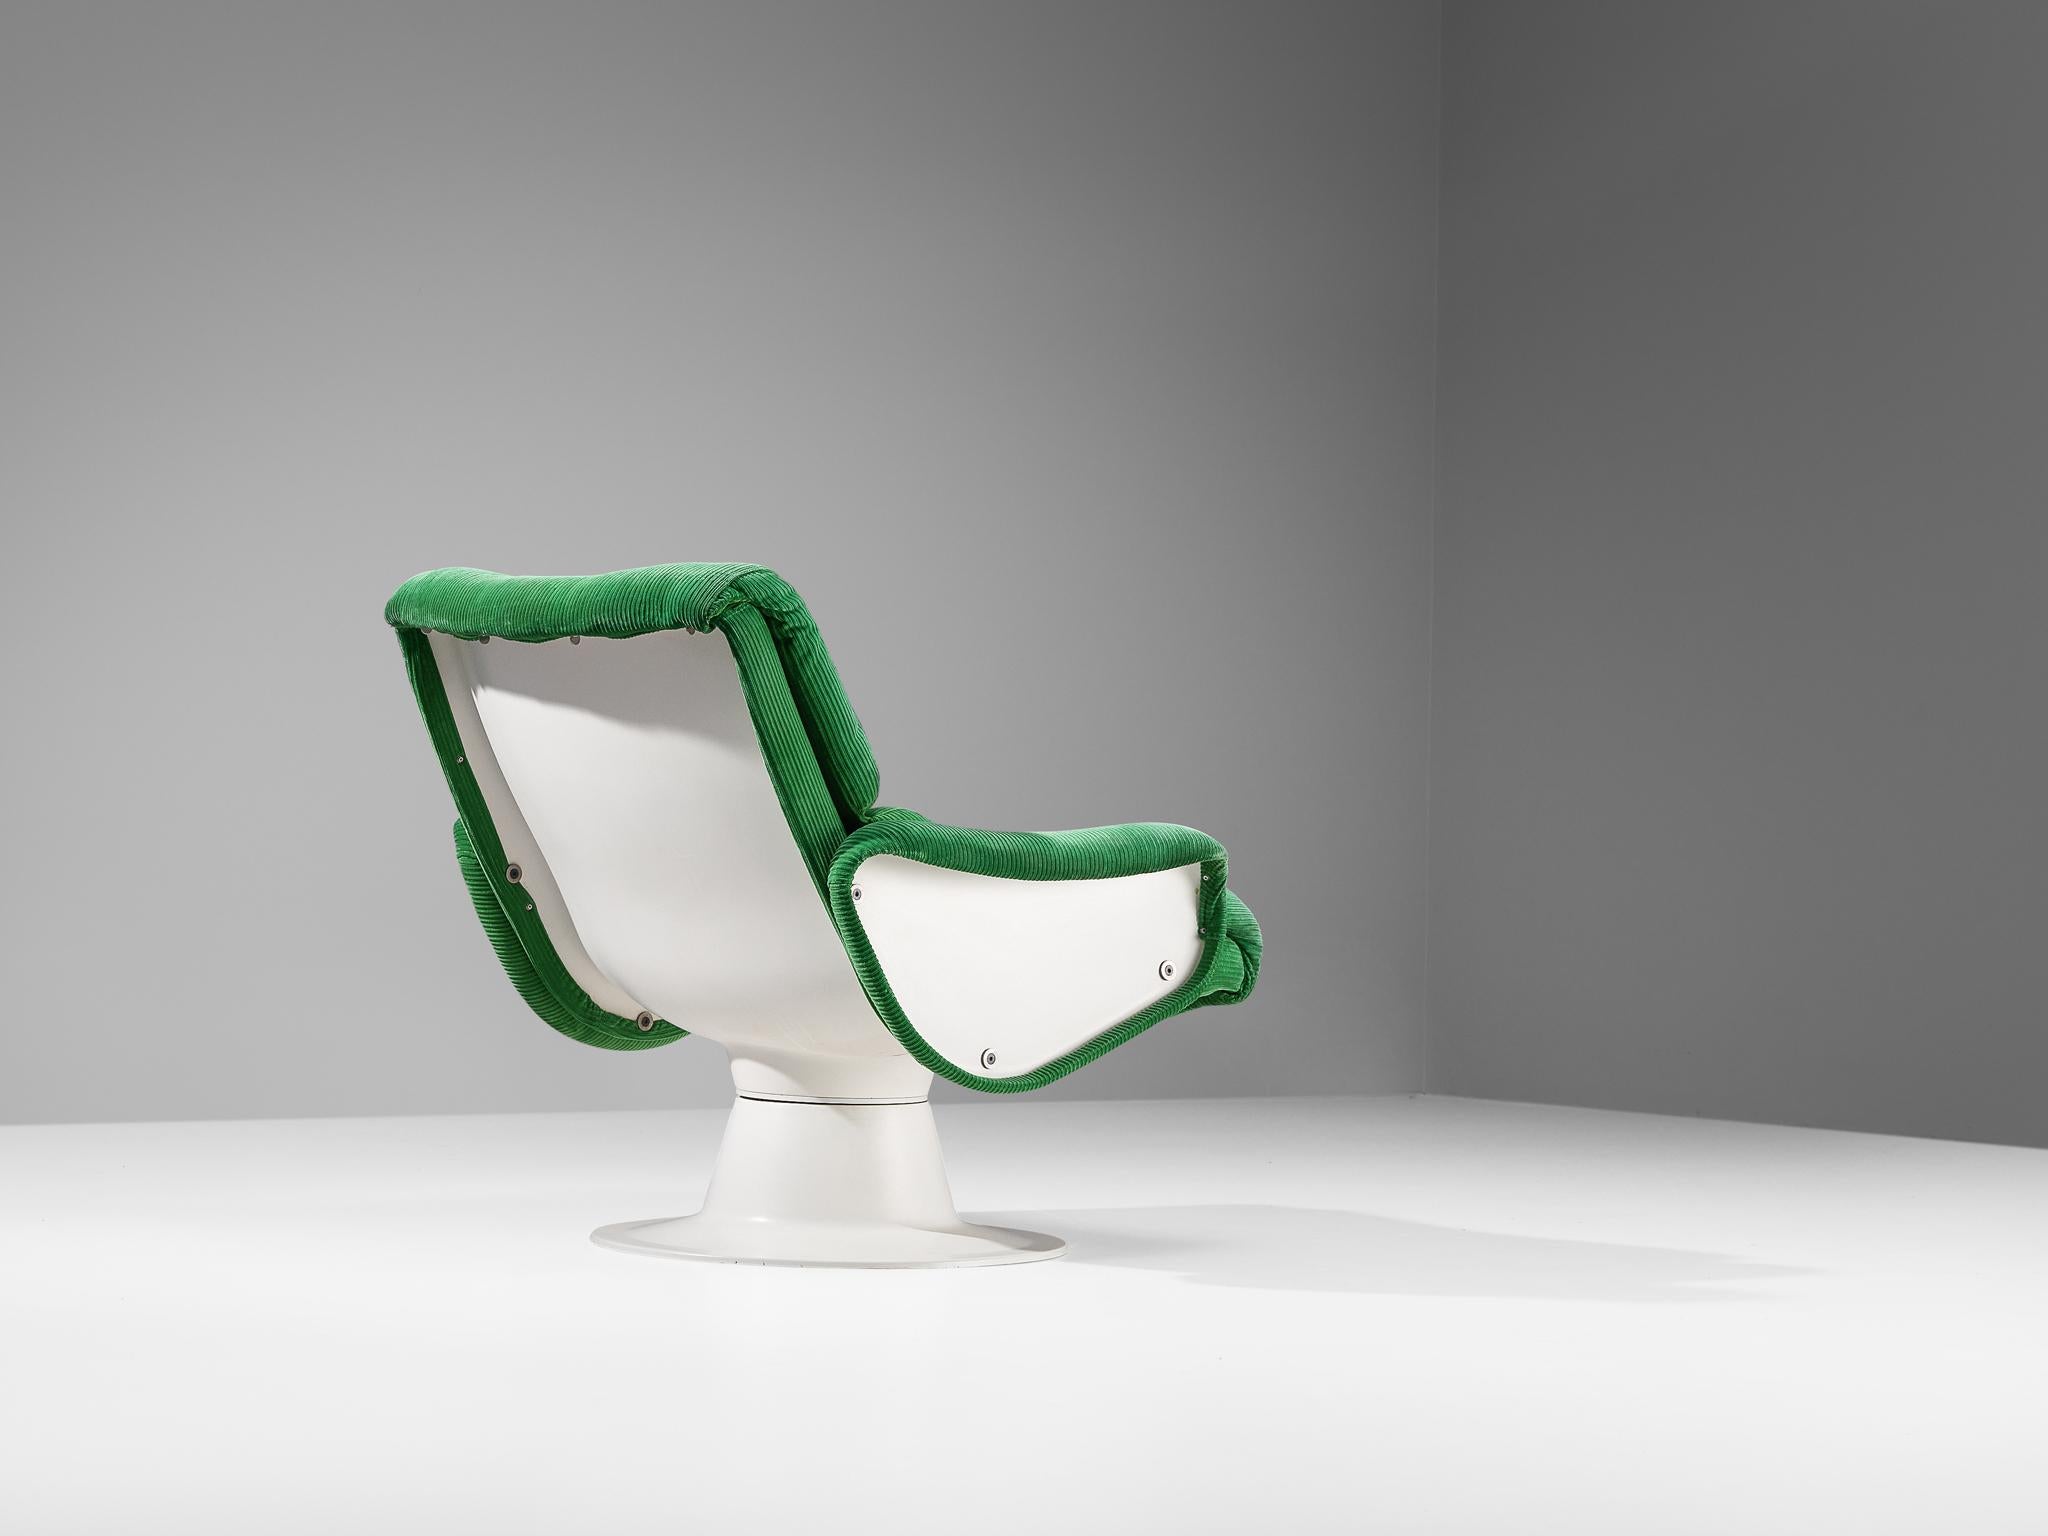 Yrjö Kukkapuro for Haimi, 'Saturnus' lounge chair, fabric, fiberglass, Finland, 1960s

Stunning armchair in bright green upholstery and white fiberglass by Finnish designer Yrjö Kukkapuro. This organic shaped chair is made in a moulded fiberglass